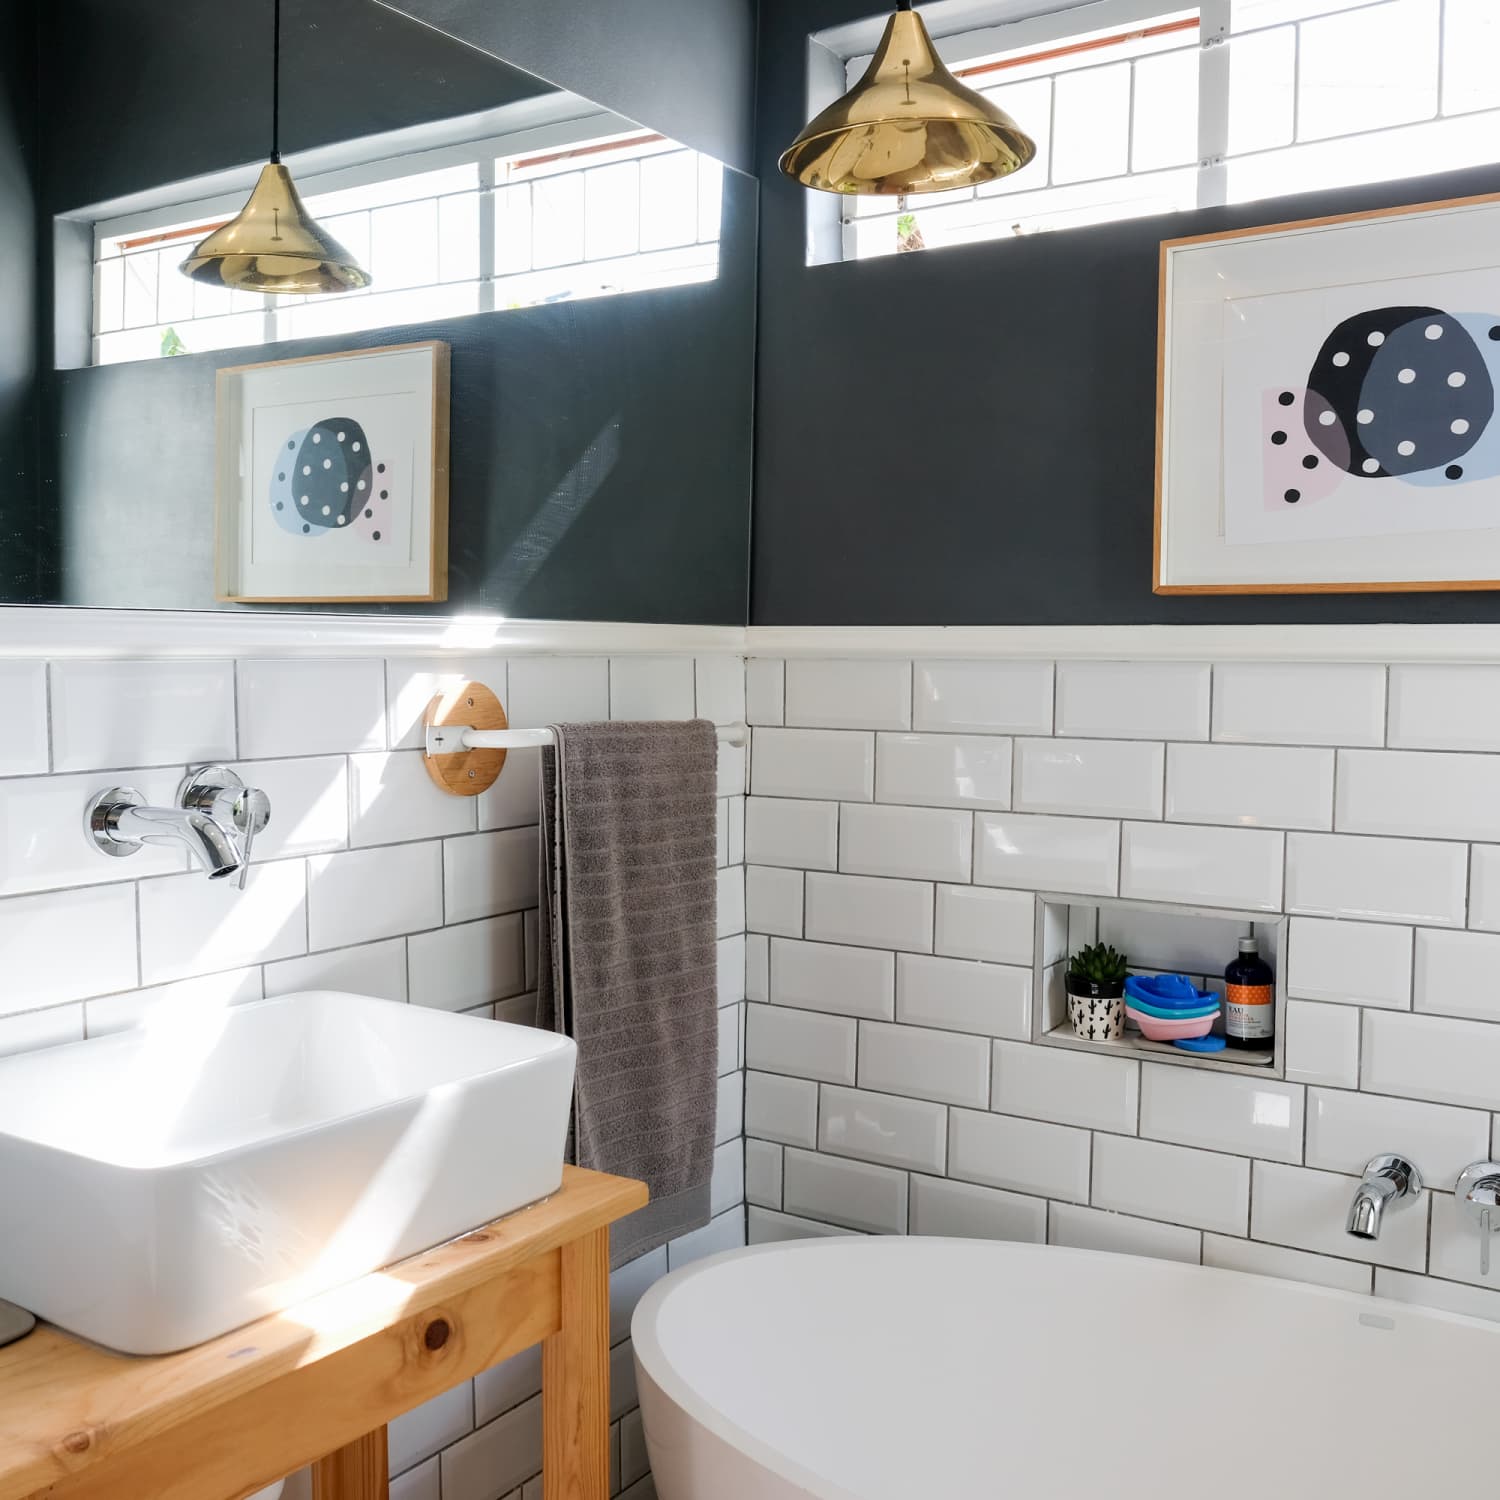 25 Small Bathroom Storage Design Ideas Storage Solutions For